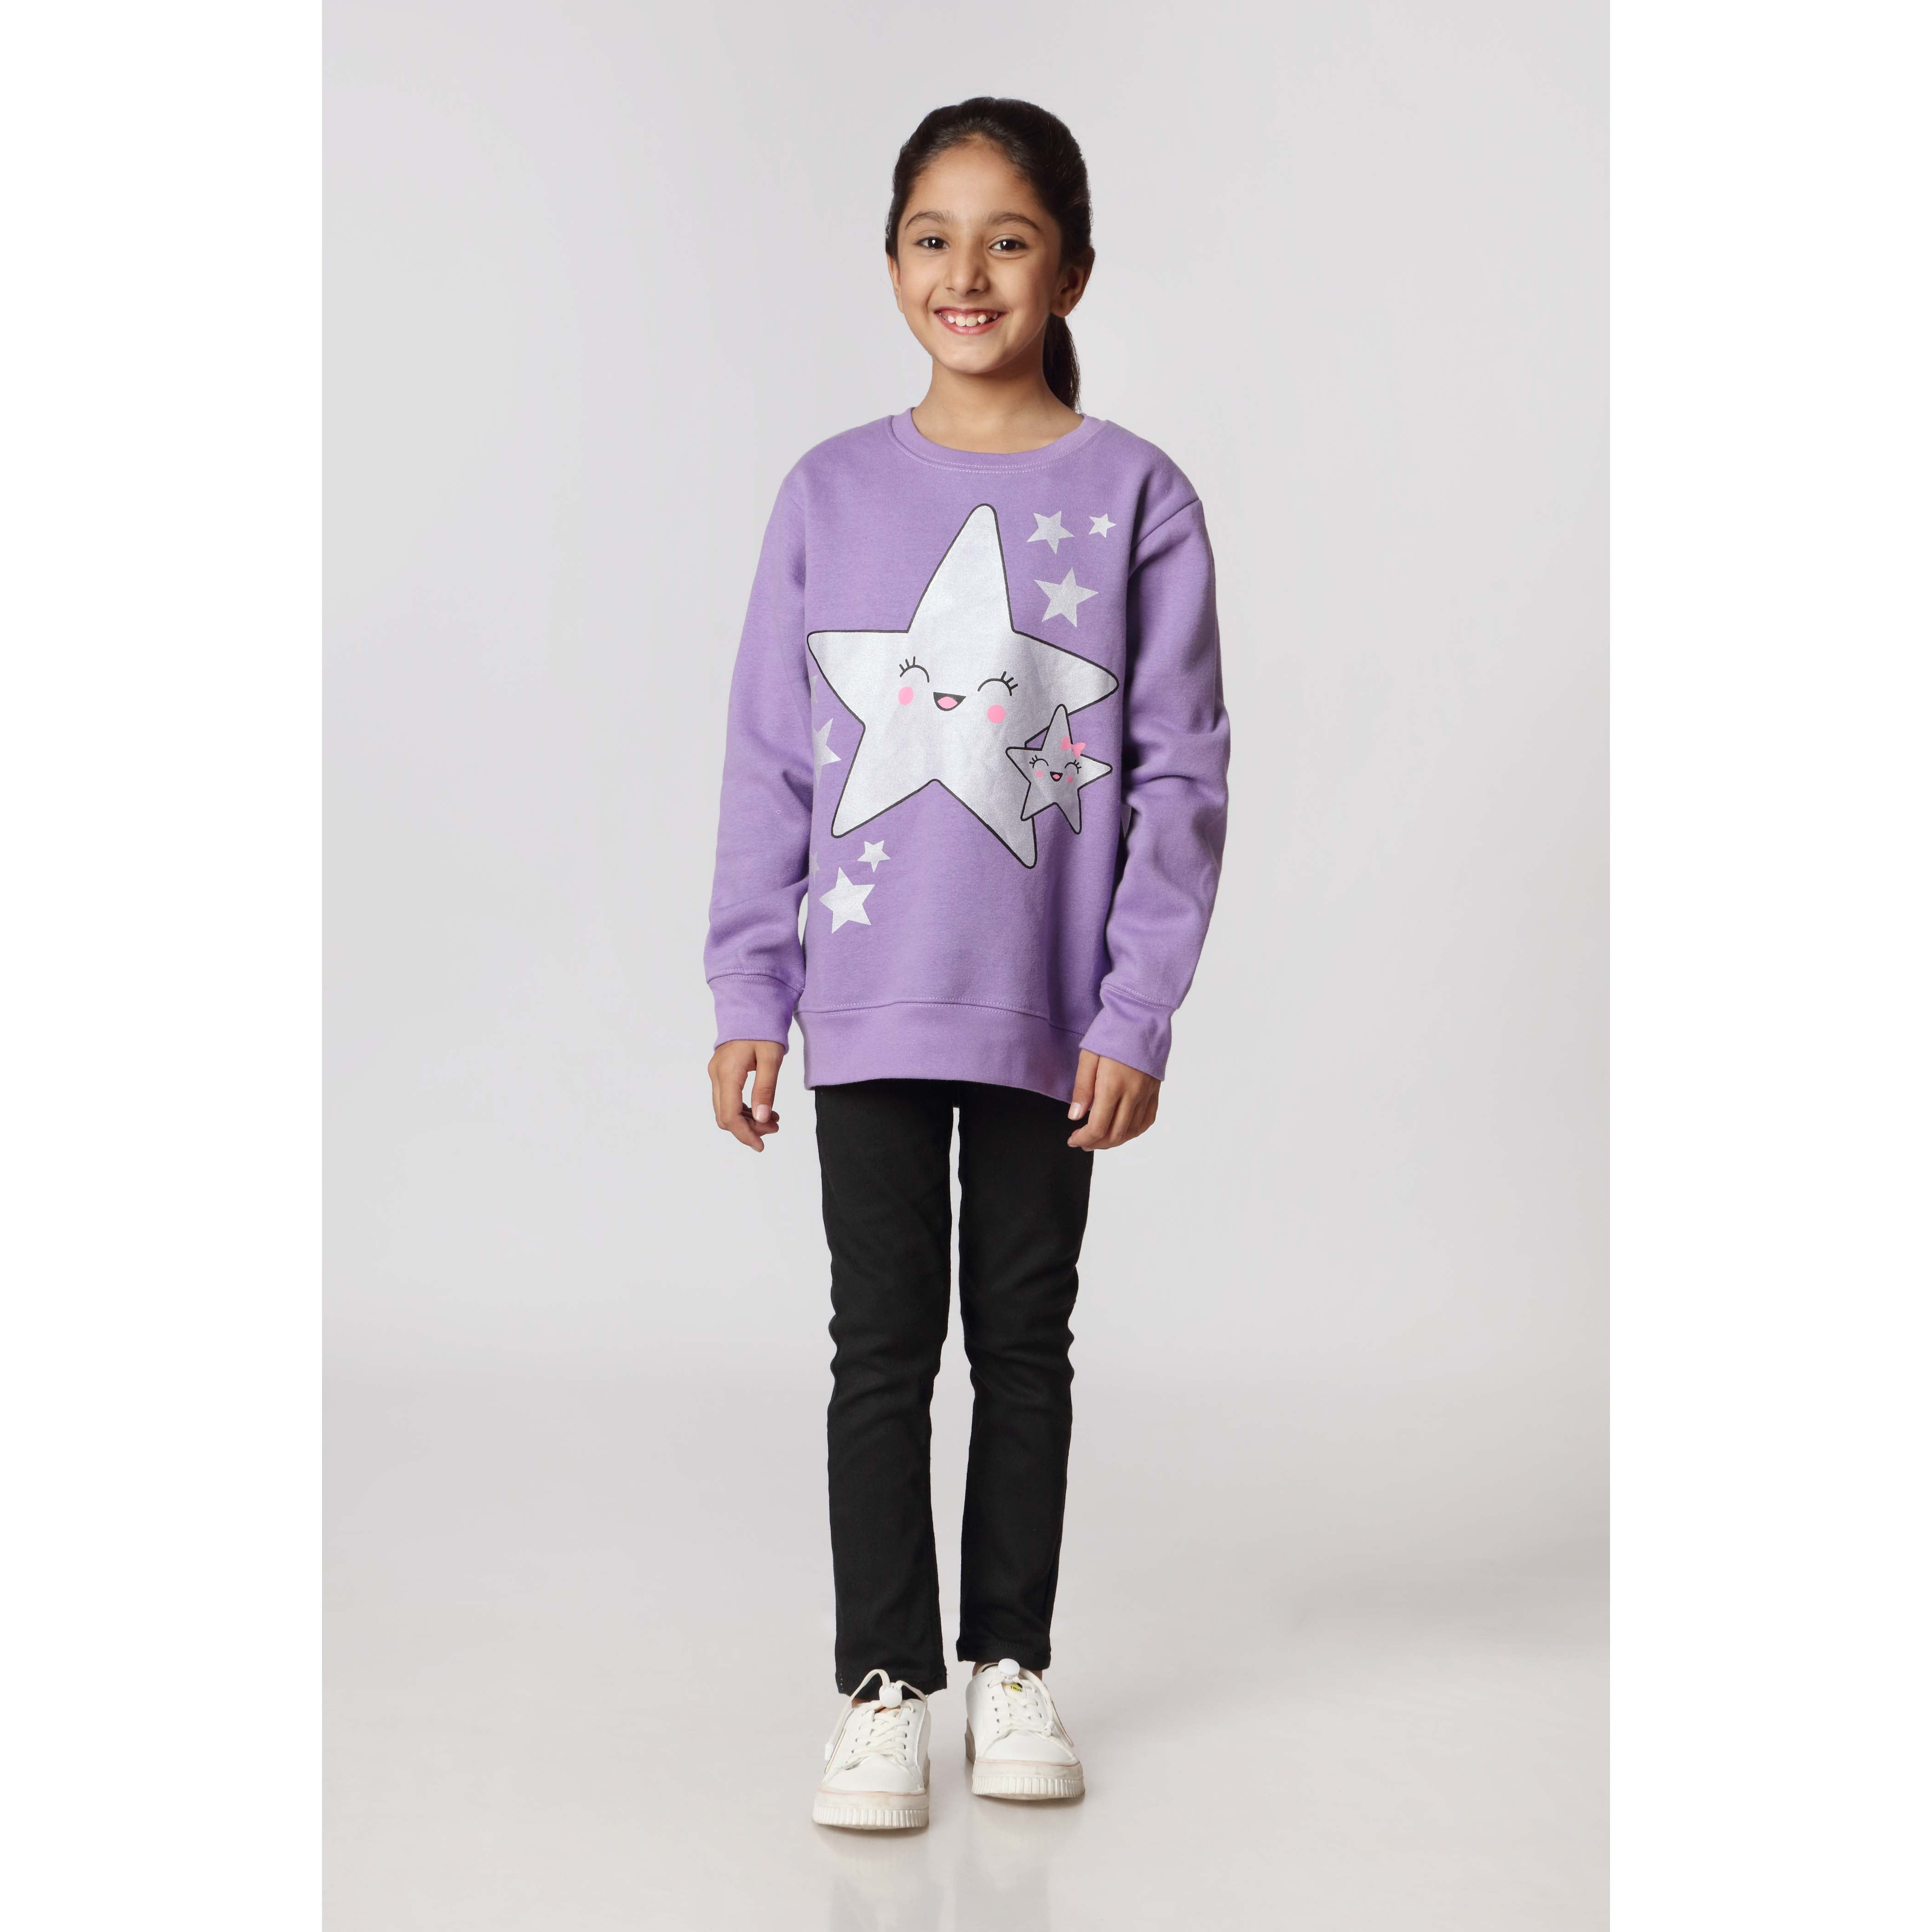 Girls Purple Fleece Sweat Shirt PW2846